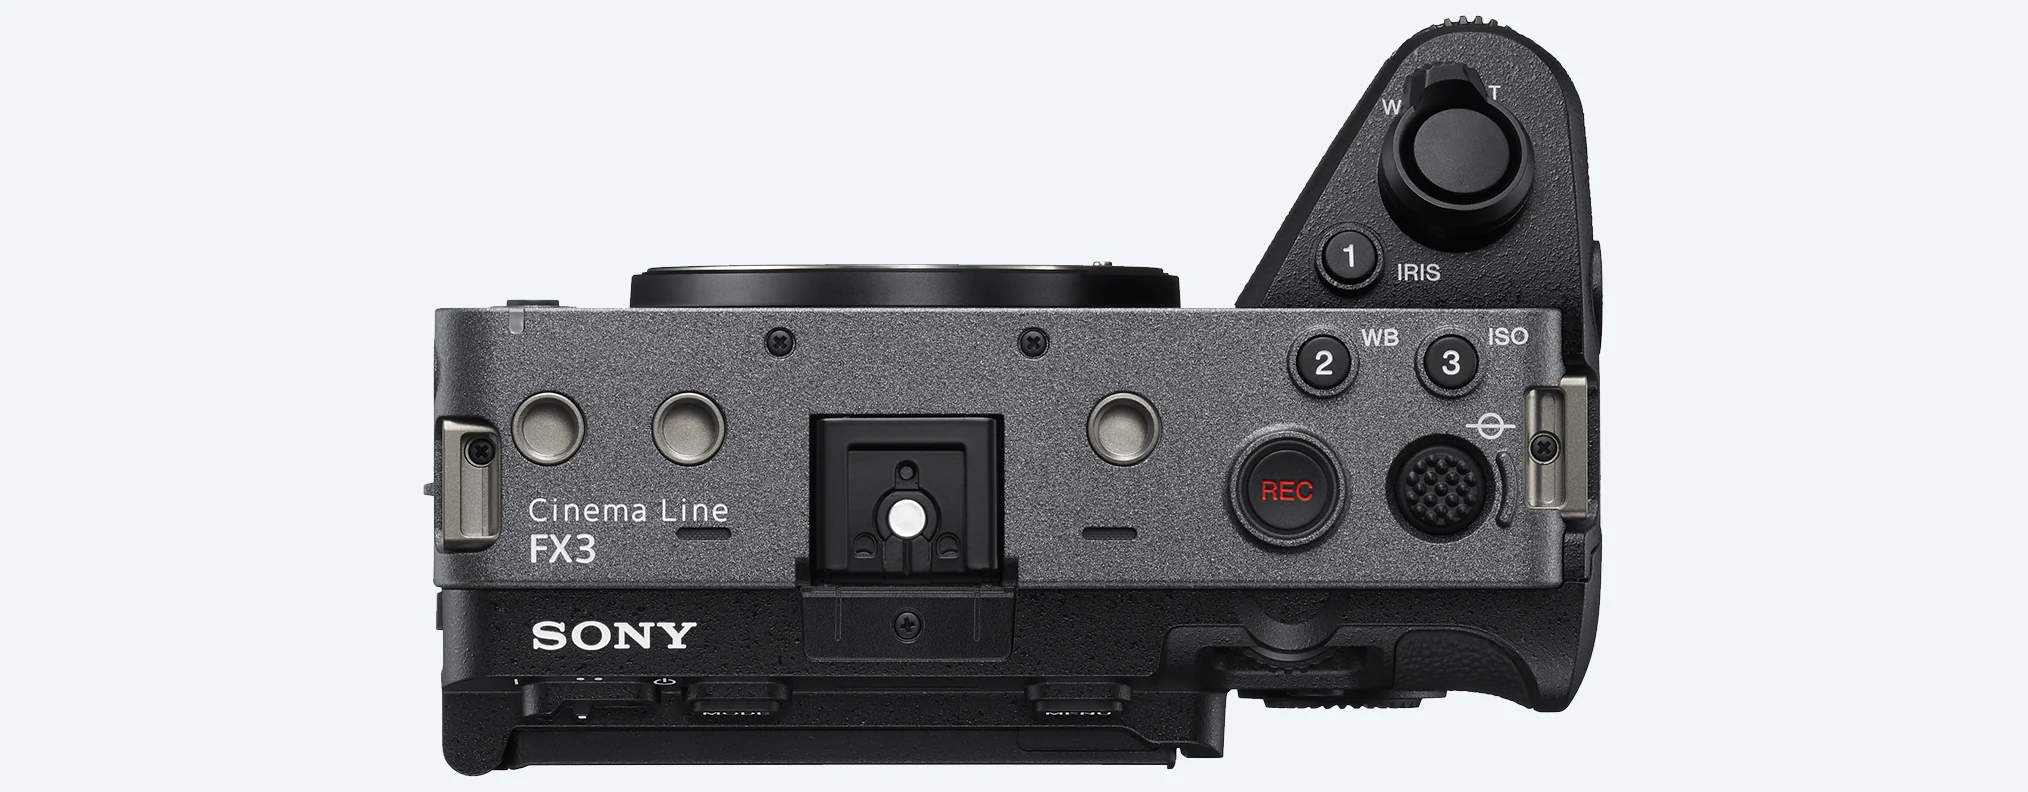 Sony cinema line fX3 camera overhead view